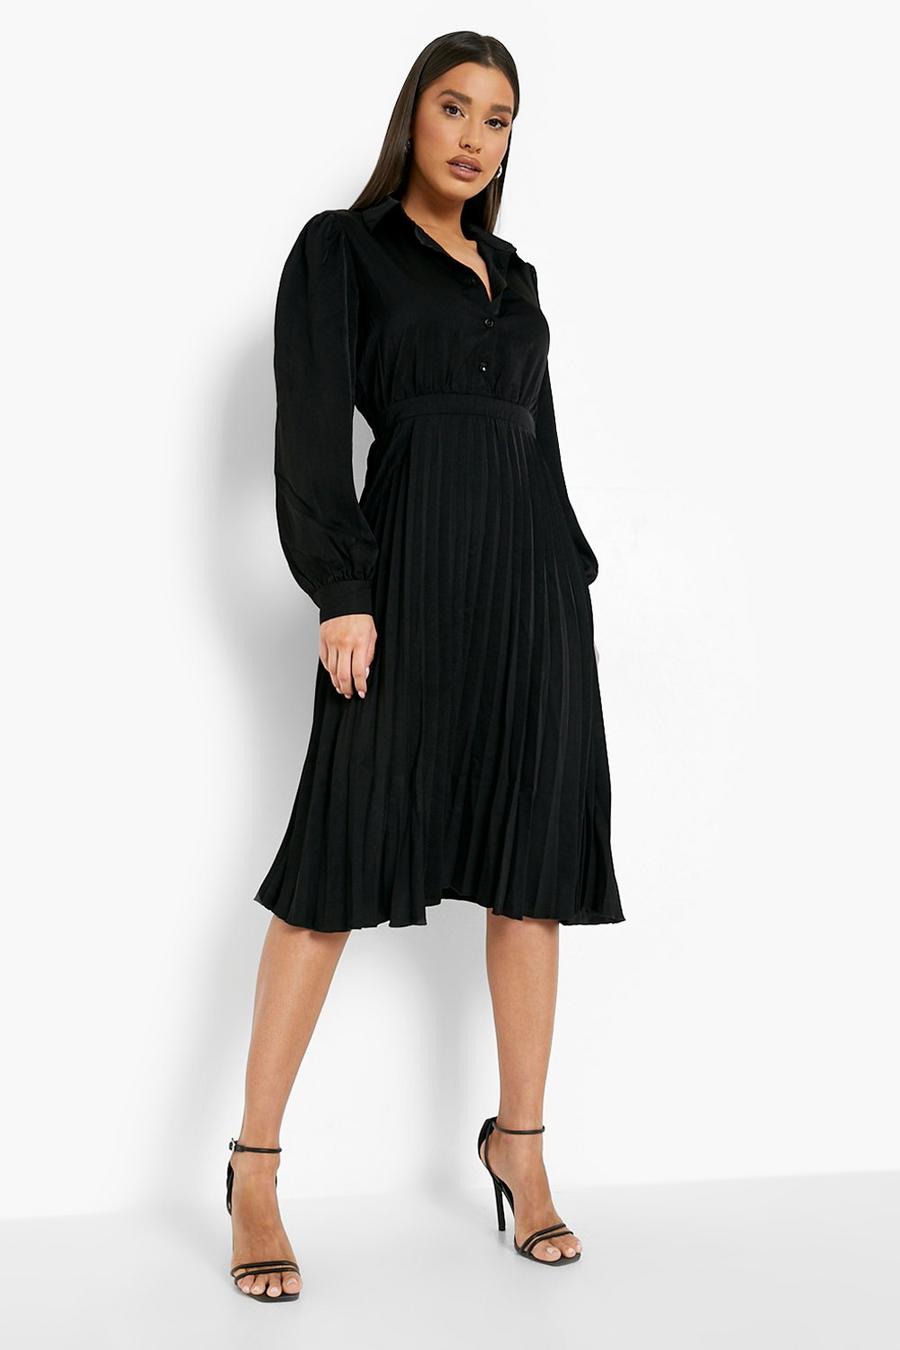 Black Satin Button Through Pleated Skirt Midi Dress